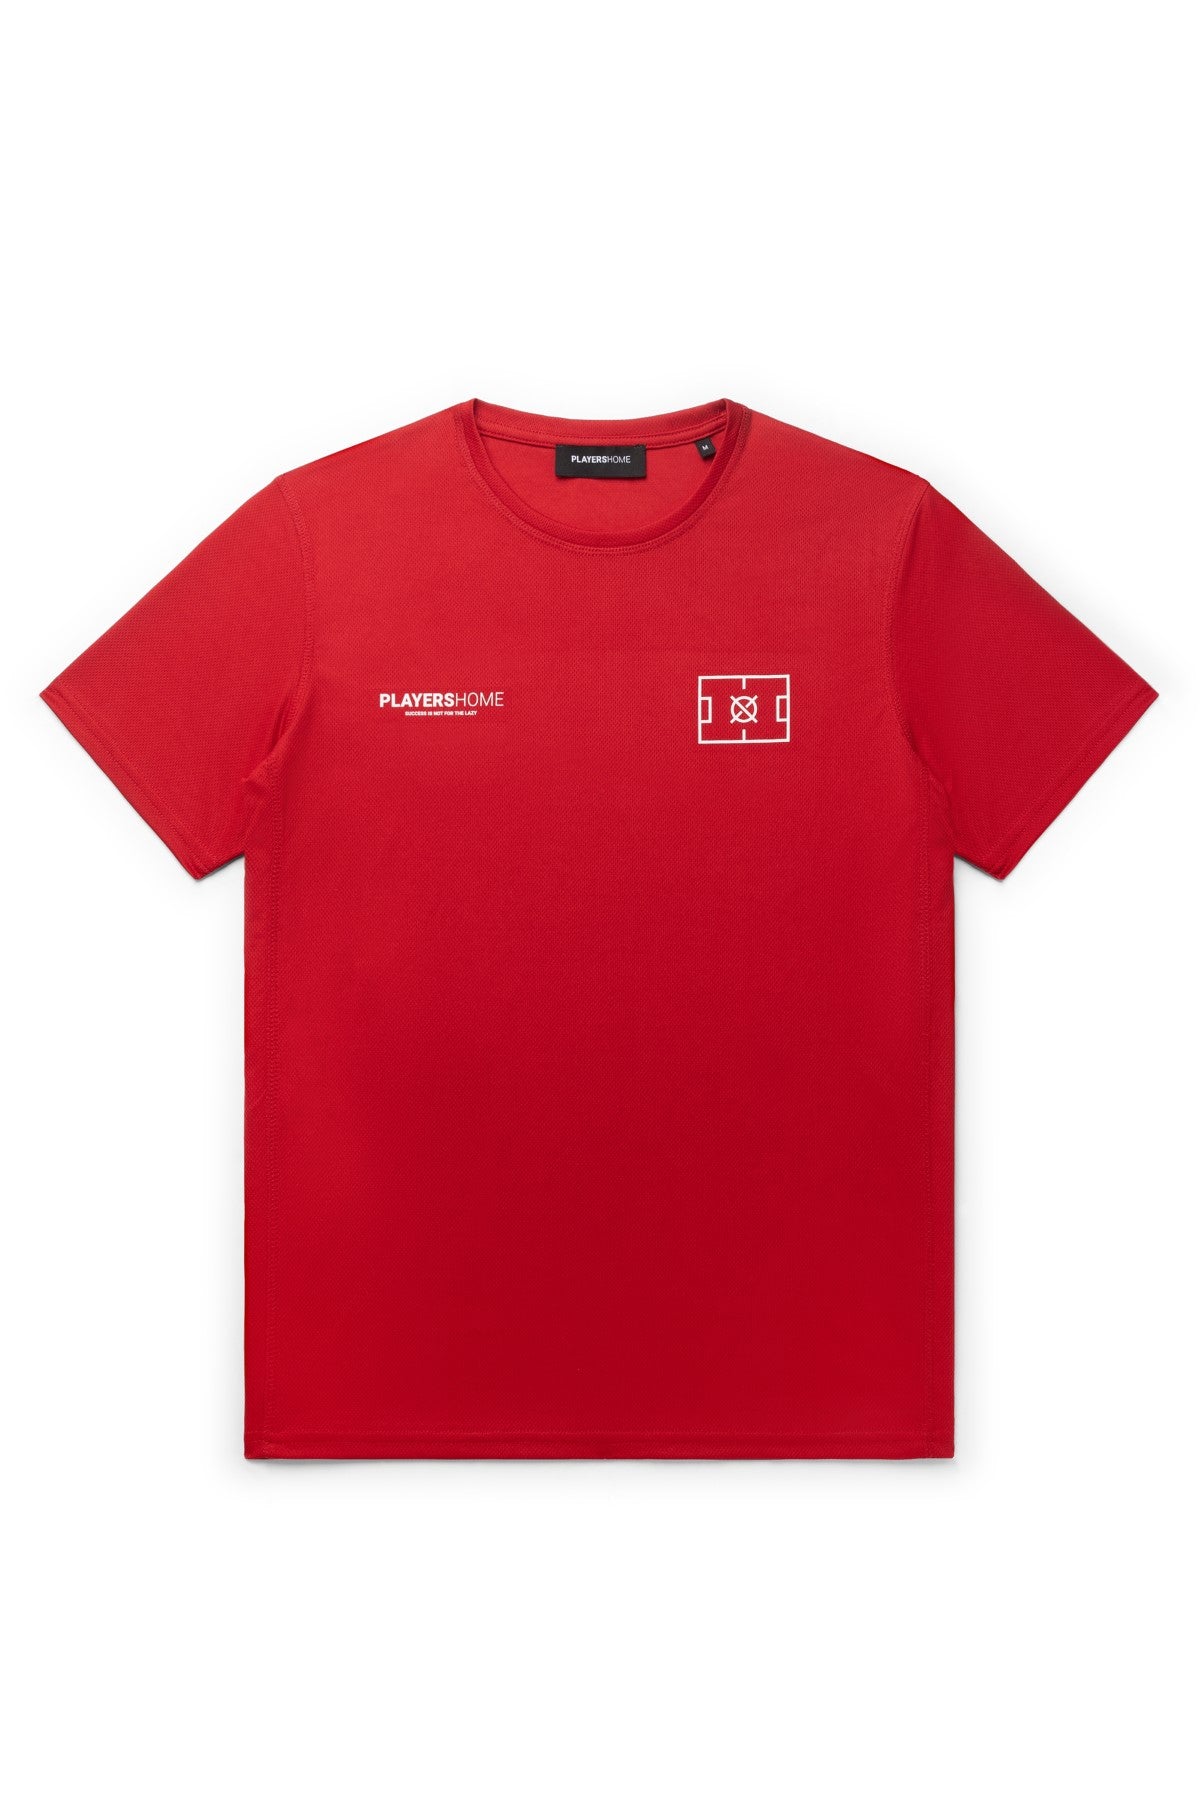 PLAYERHOME x TRUST T-Shirt - Red